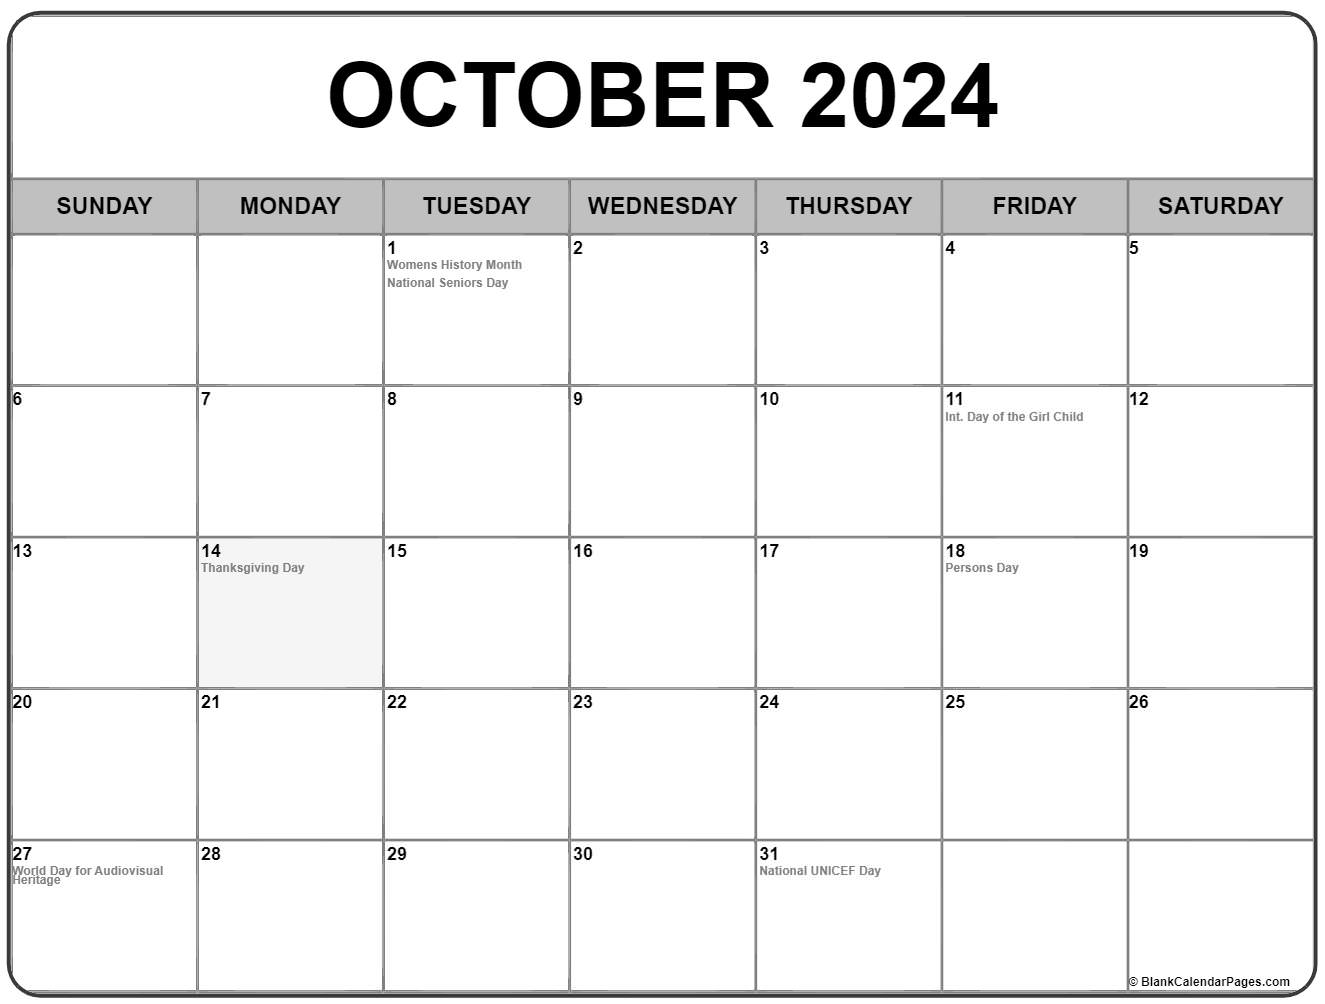 october-2022-with-holidays-calendar